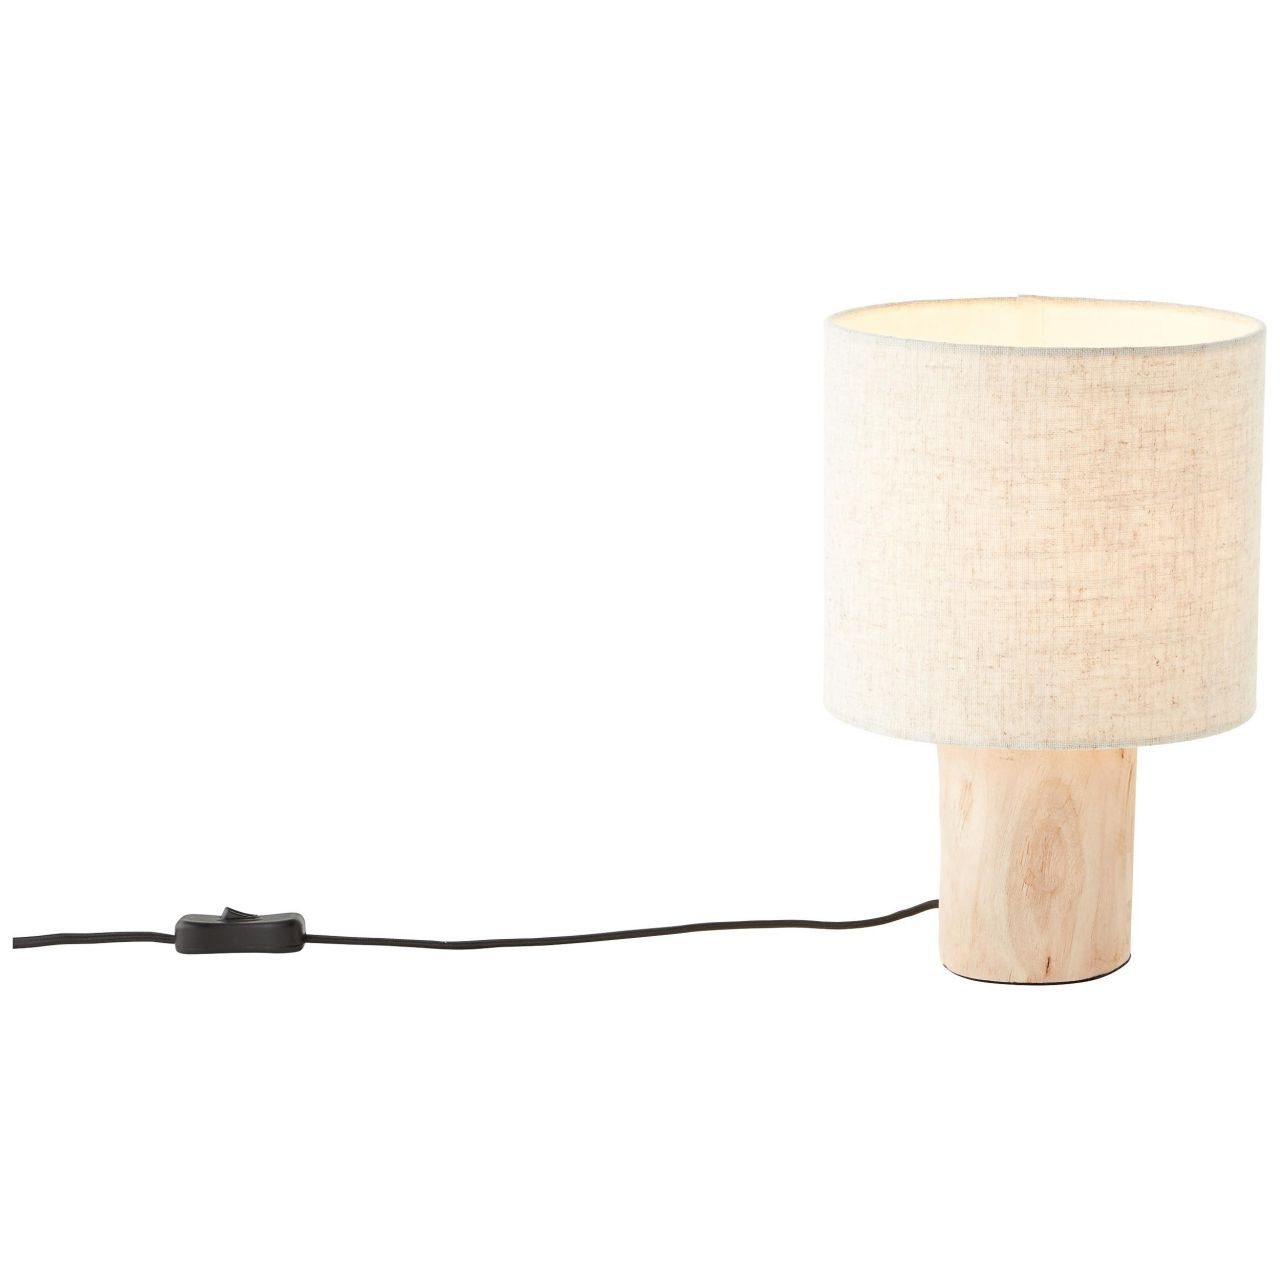 Brilliant Tischleuchte Pia, Lampe, E27, Tischleuchte natur, aus A60, 40W, 1x Holz nachhaltiger Pia